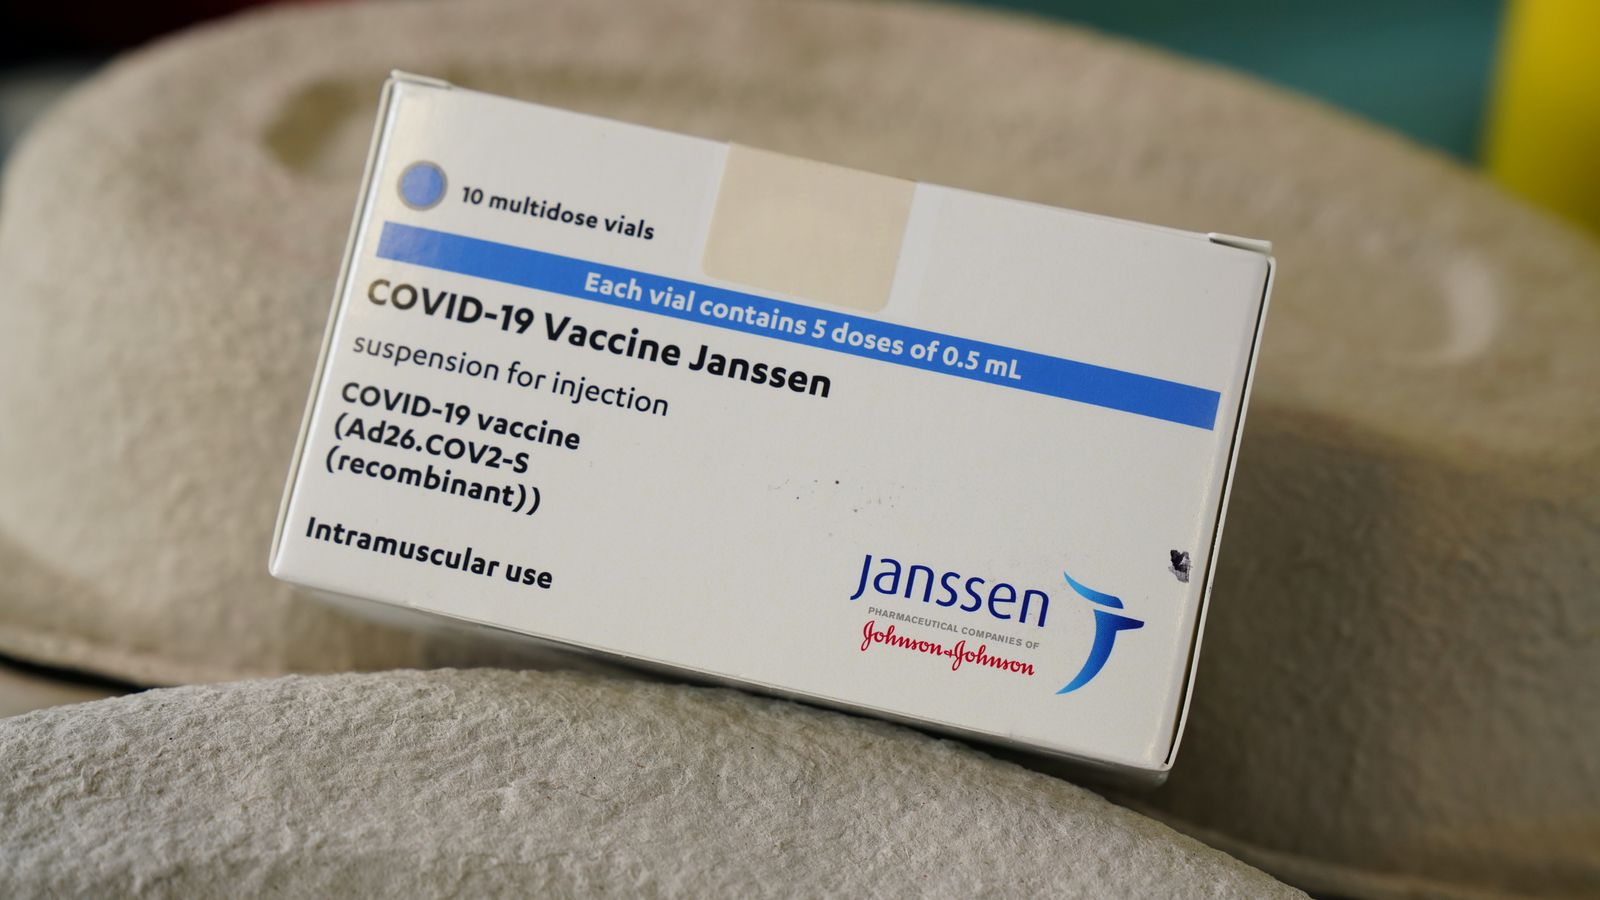 johnson and johnson vaccine production